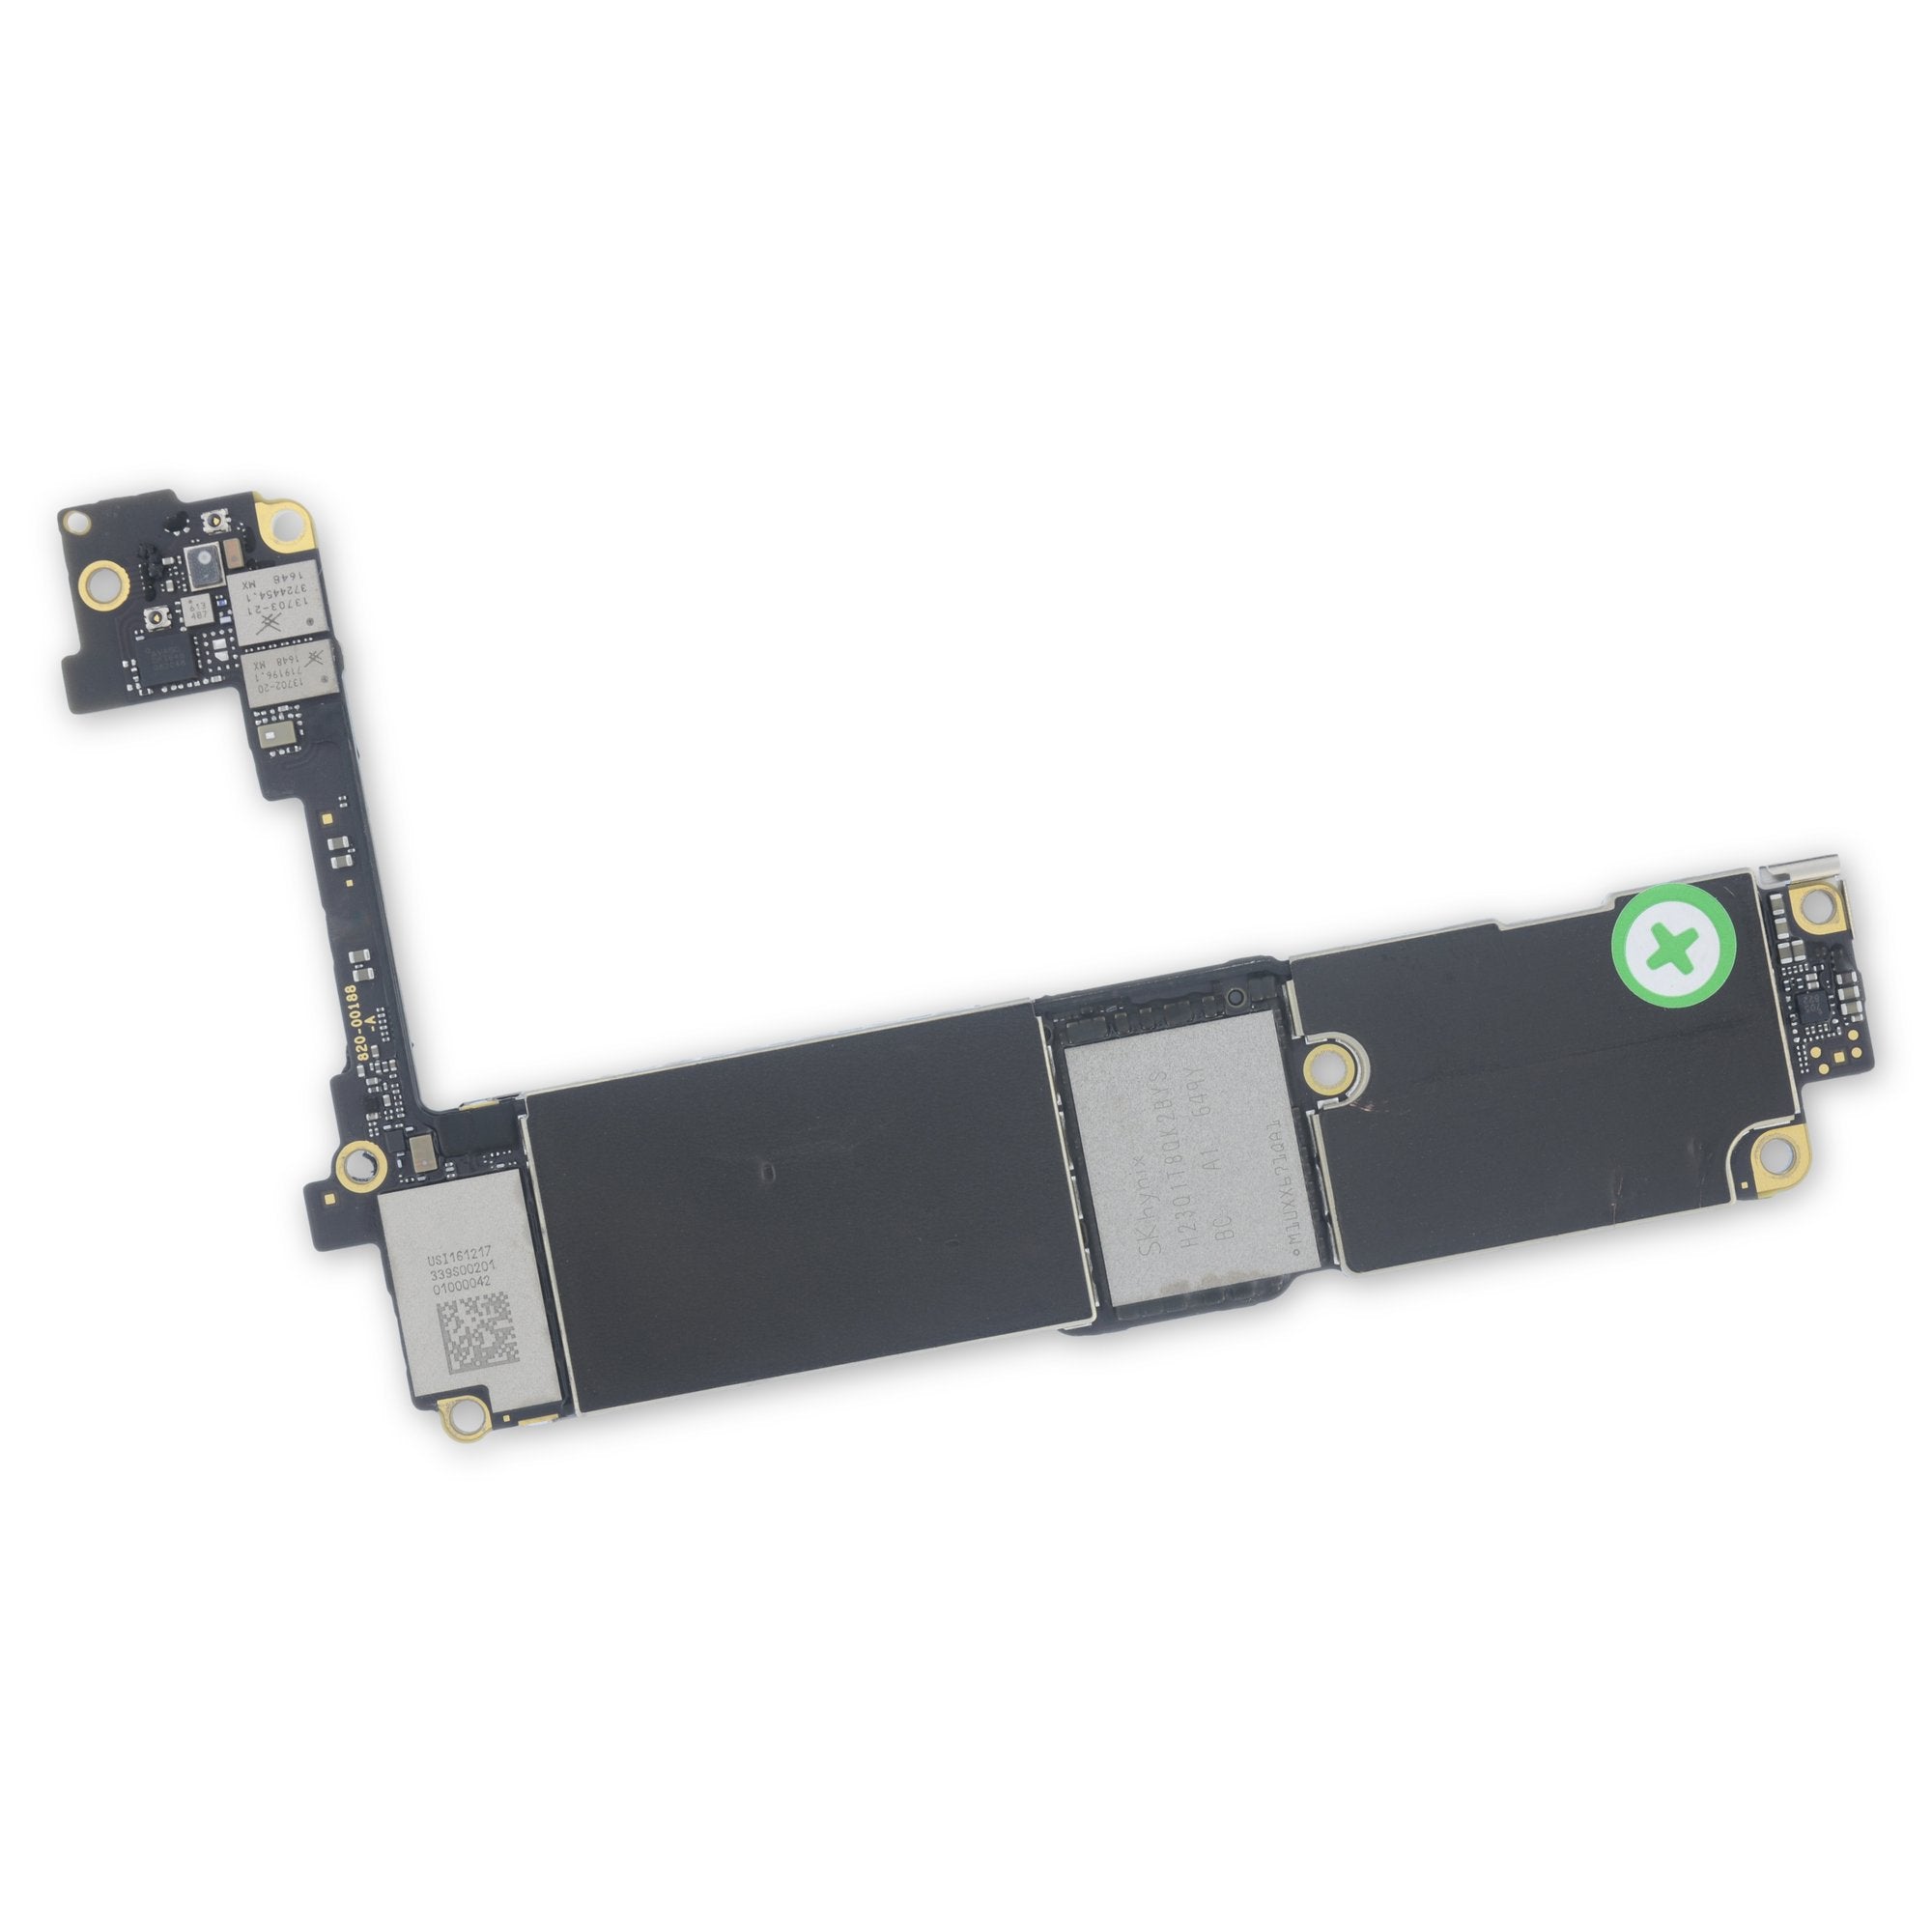 iPhone 7 A1660 (Verizon) Logic Board